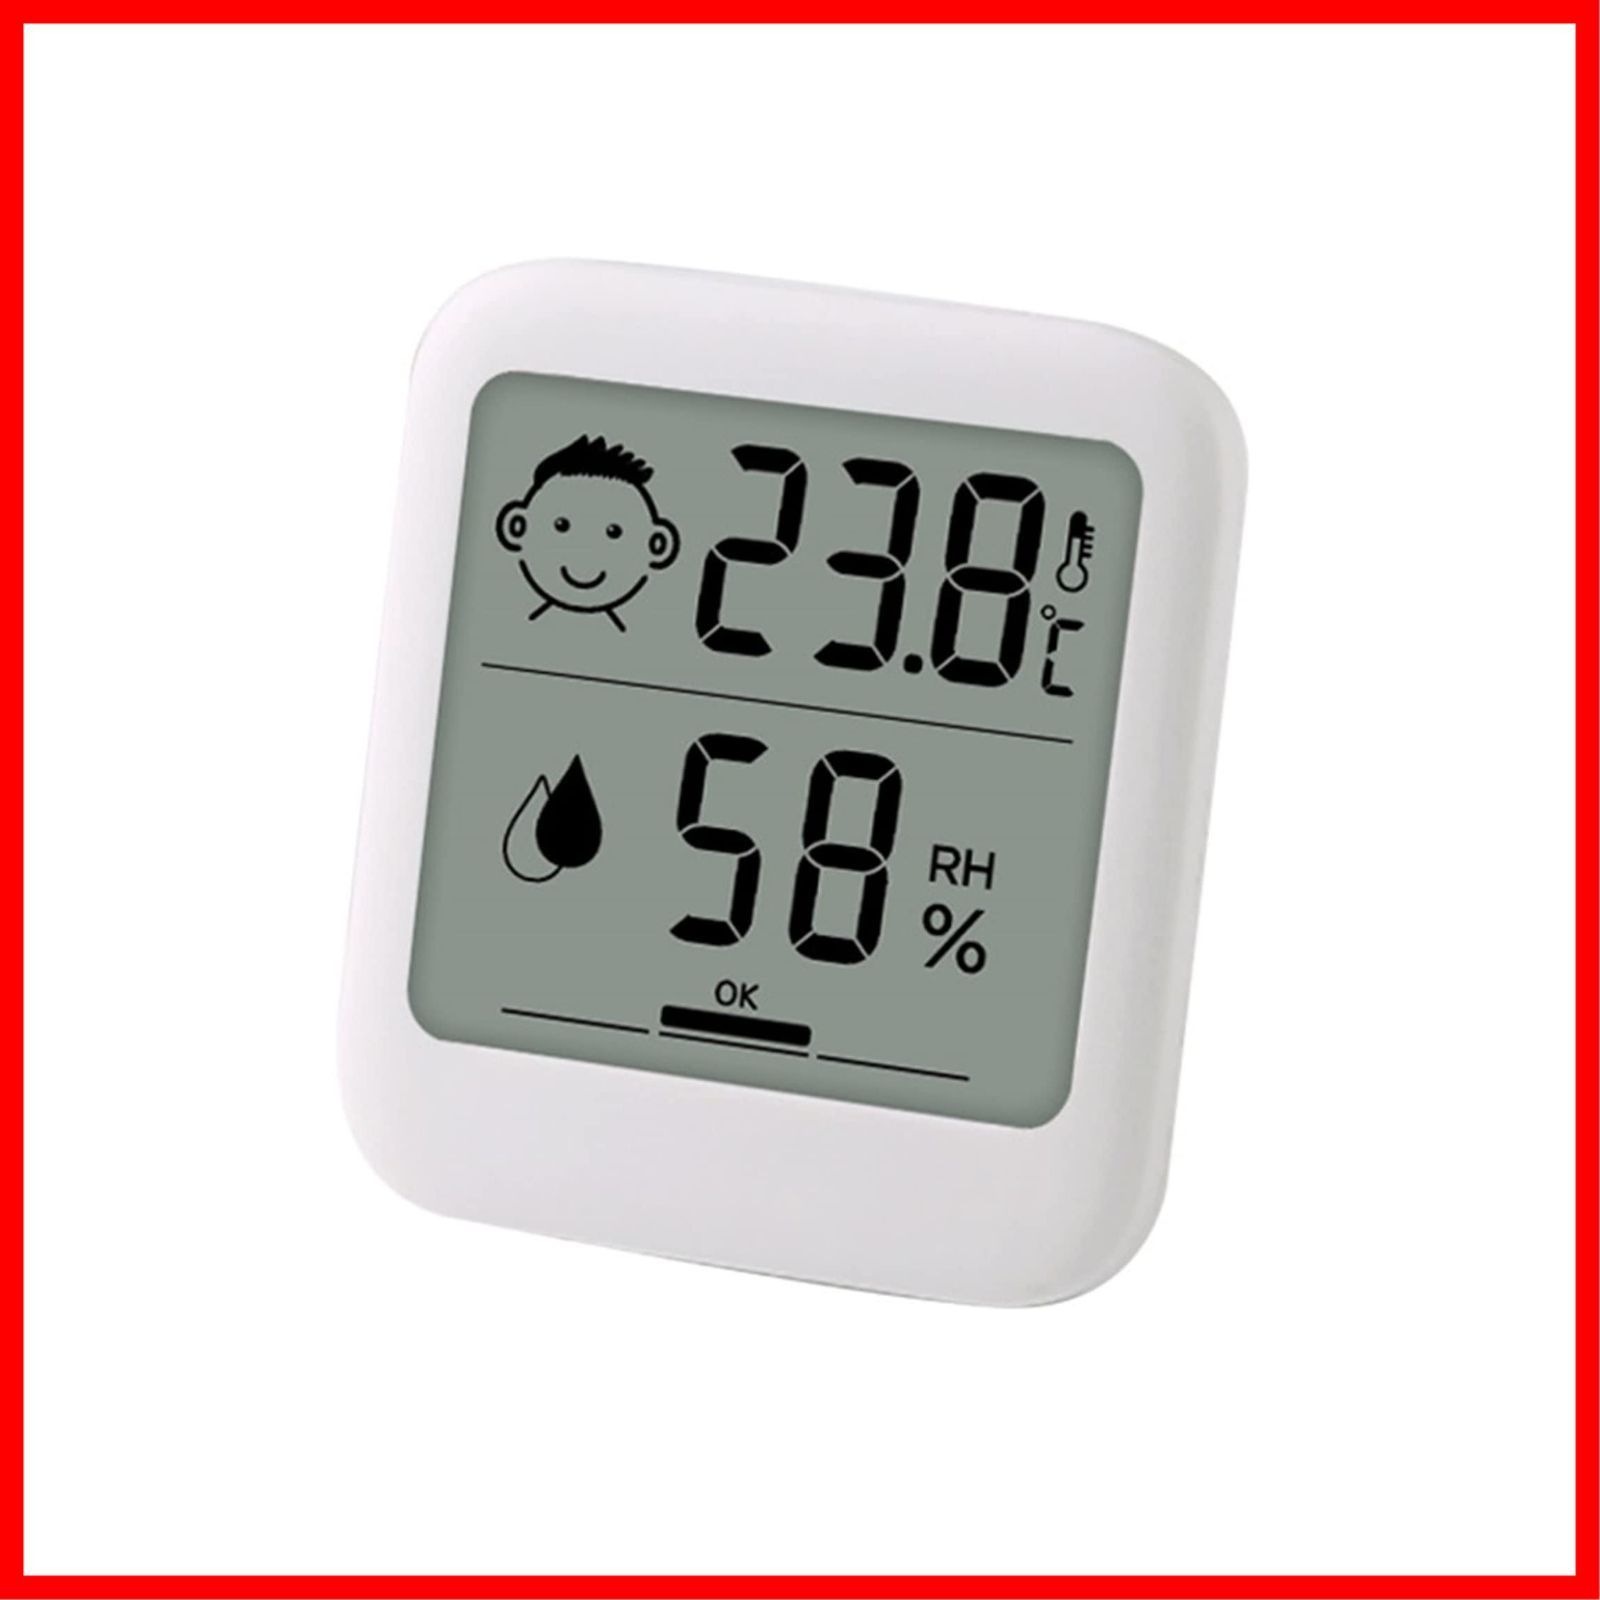 即日発送】HATUSOKU デジタル温湿度計 快適度顔表示付 温度計 湿度計